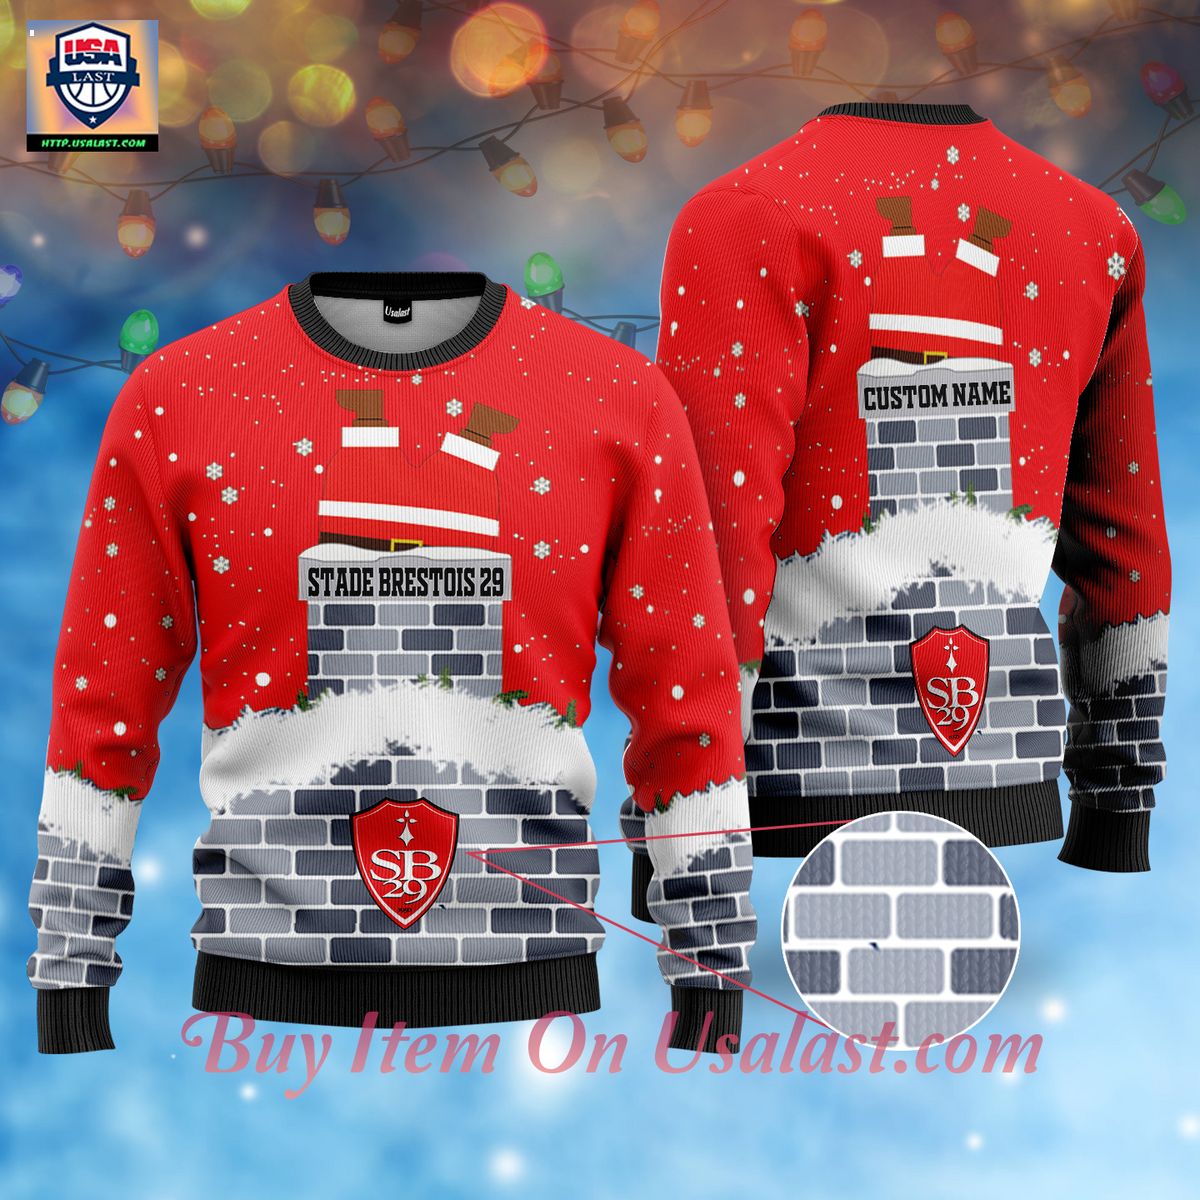 Here’s Stade Brestois 29 Santa Claus Custom Name Ugly Christmas Sweater